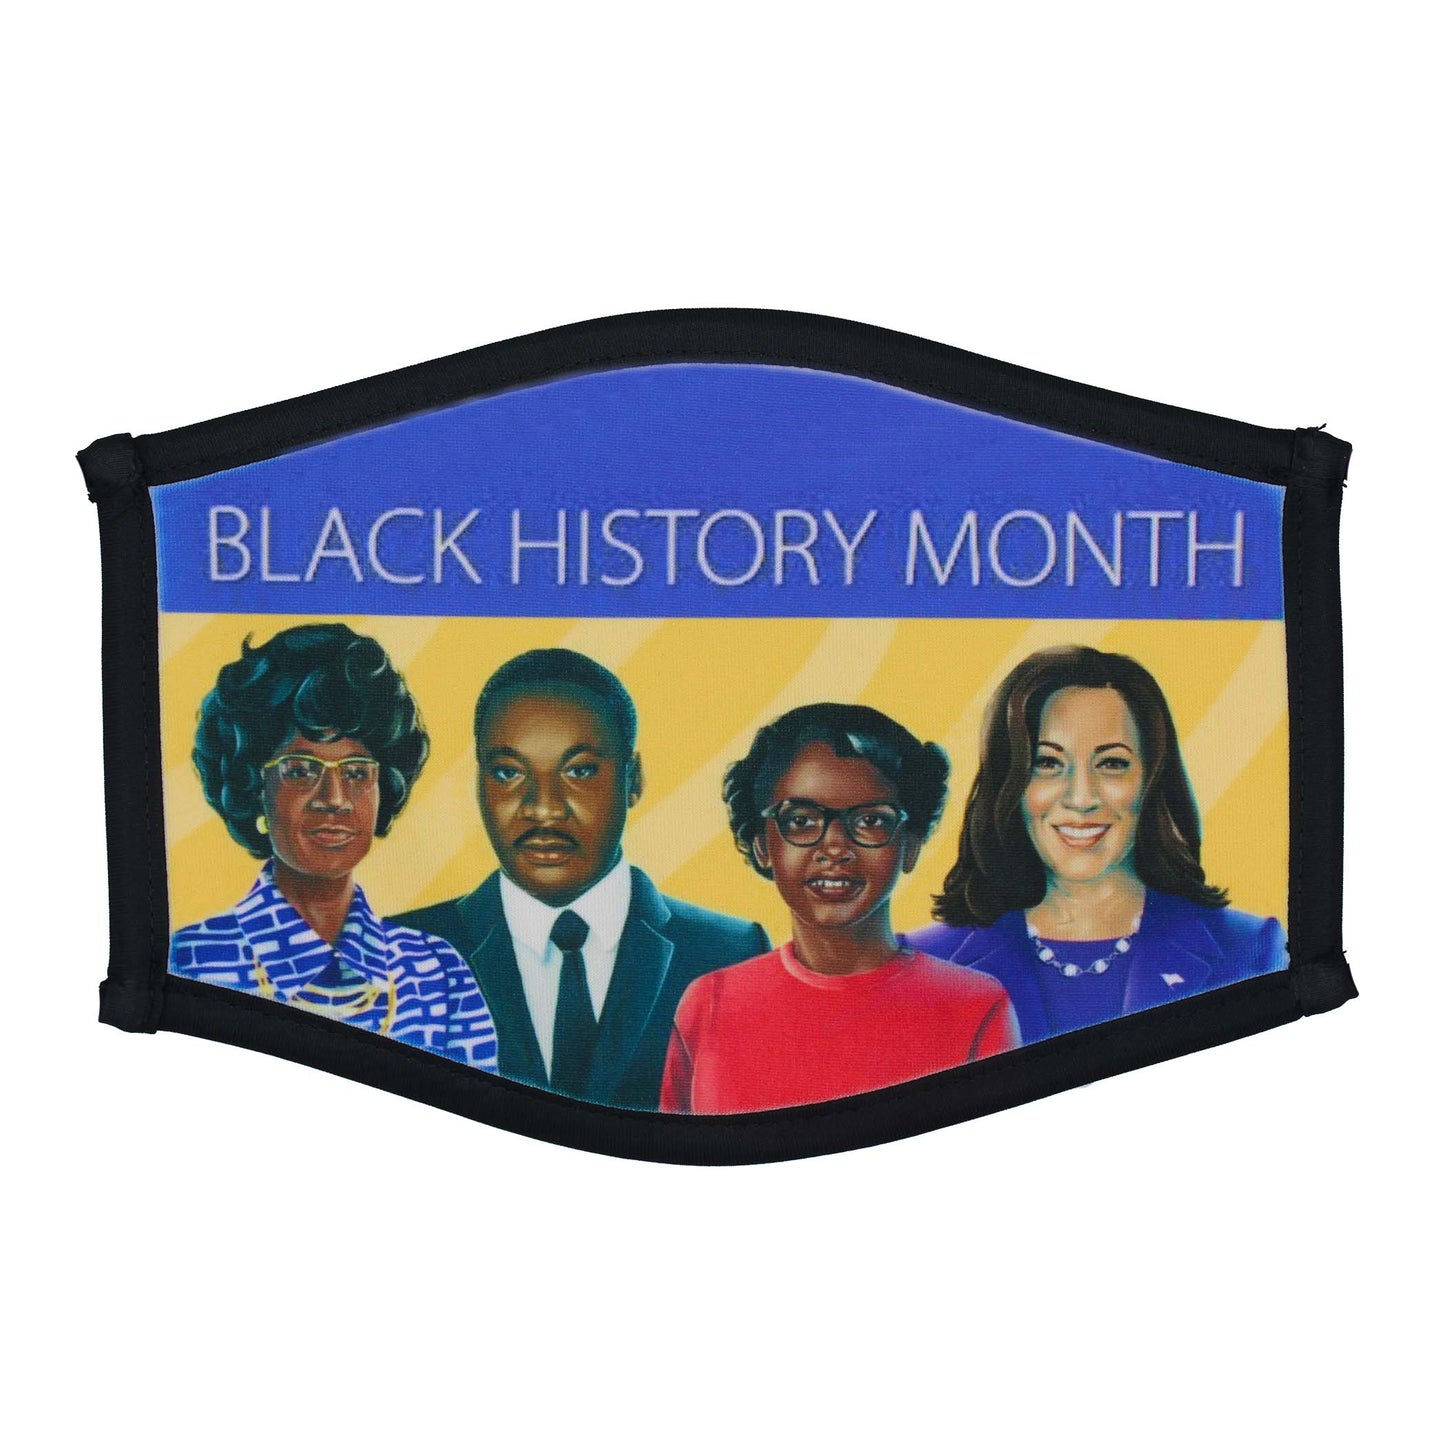 Black History Month - SHIRLEY, MARTIN, CLAUDETTE, AND KAMALA